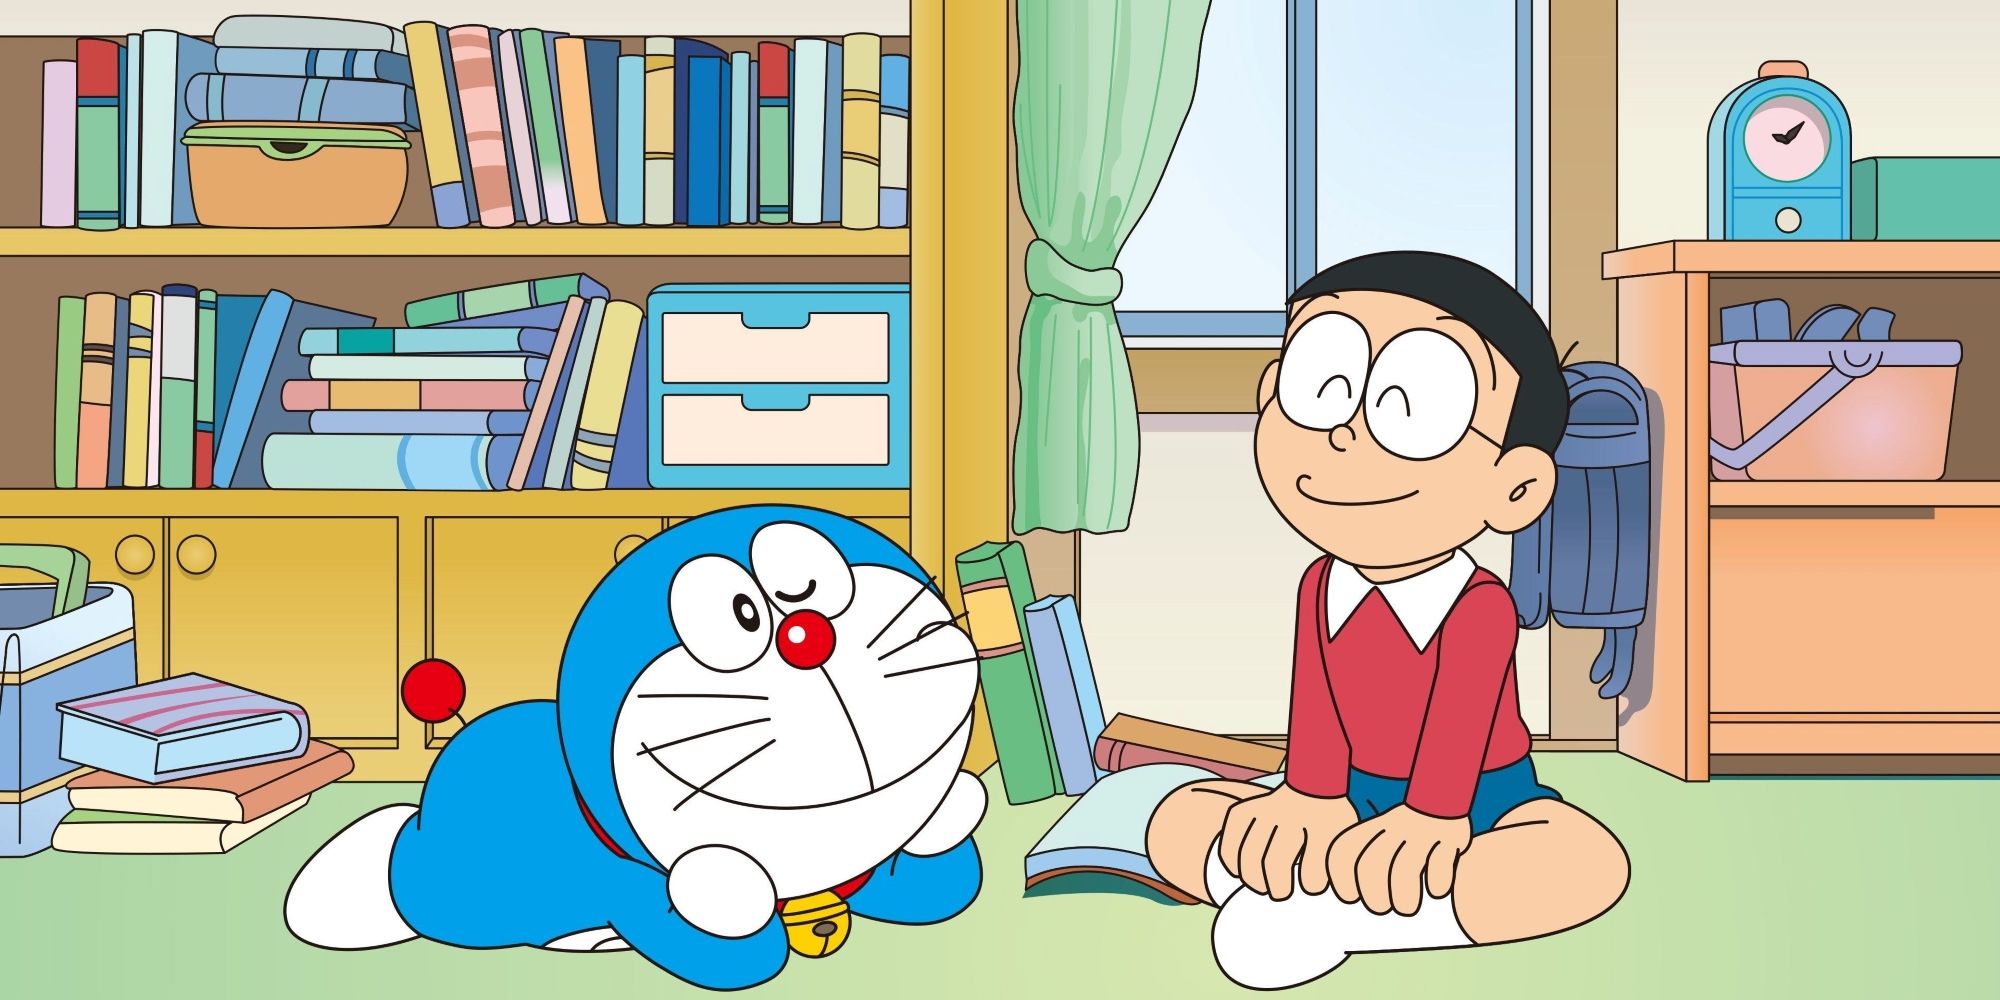 Disney is Bringing Doraemon the Iconic Anime Robot Cat to American TV